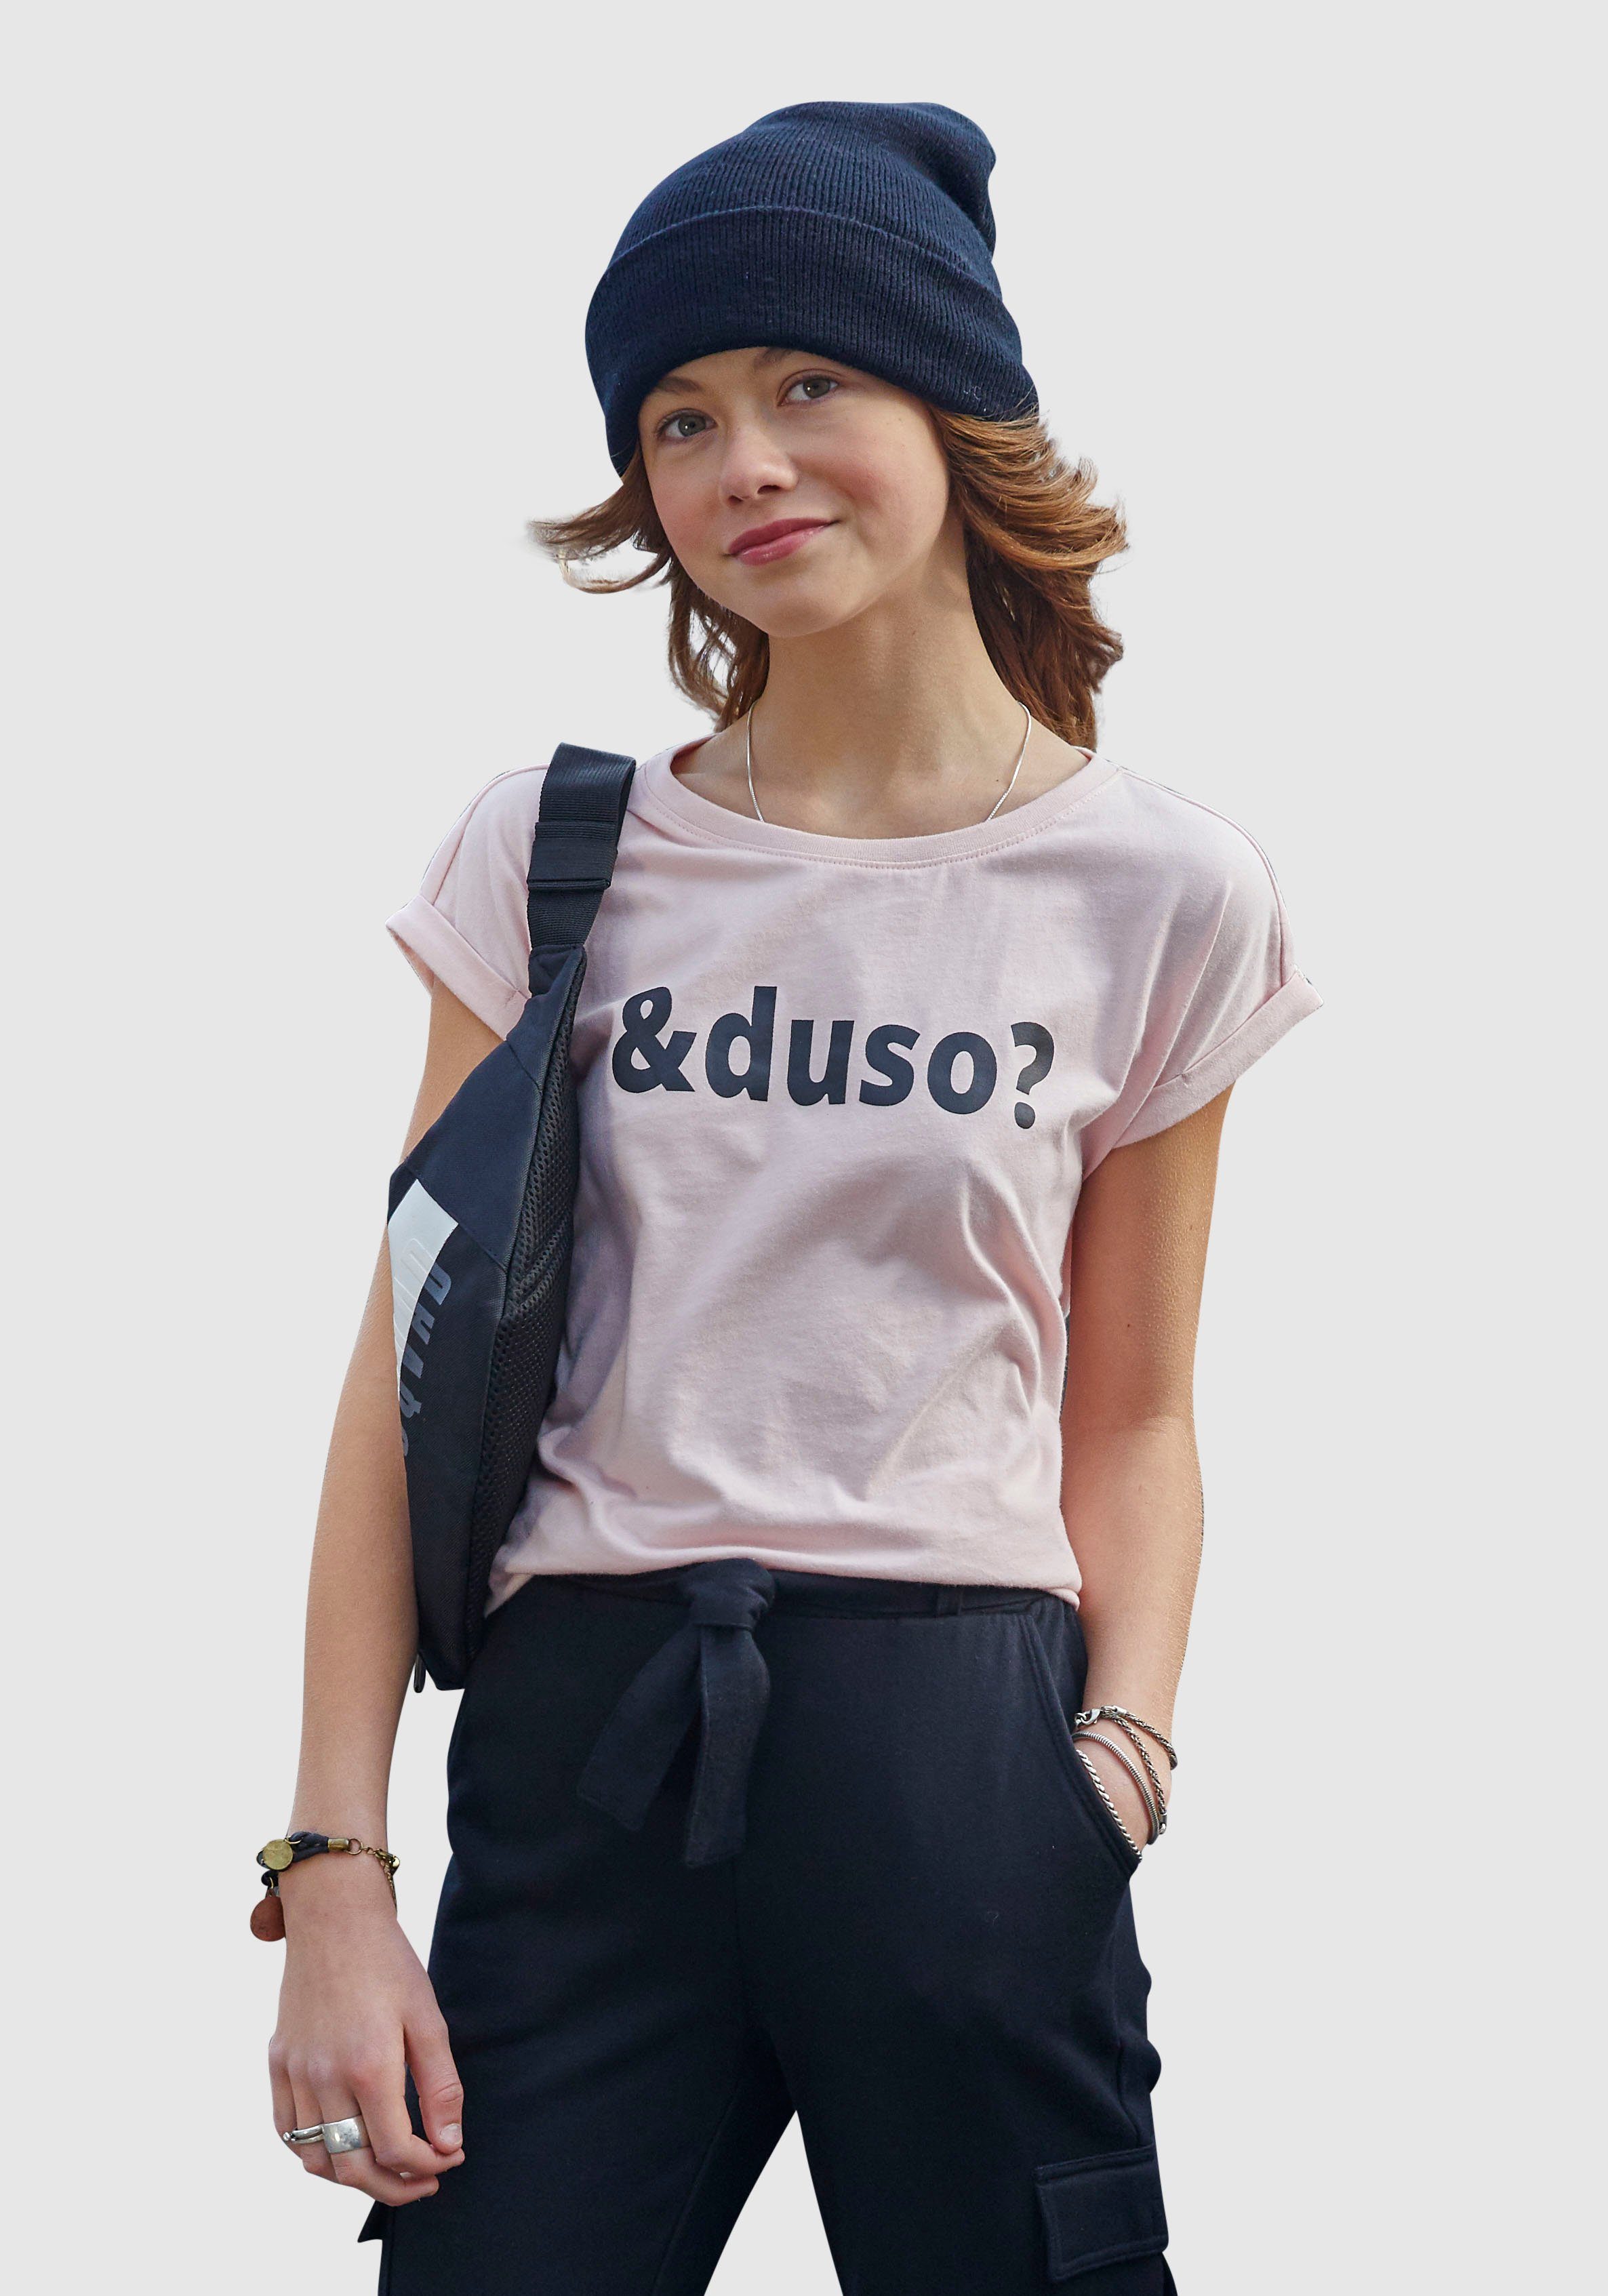 Passform &duso? T-Shirt KIDSWORLD in bequemer